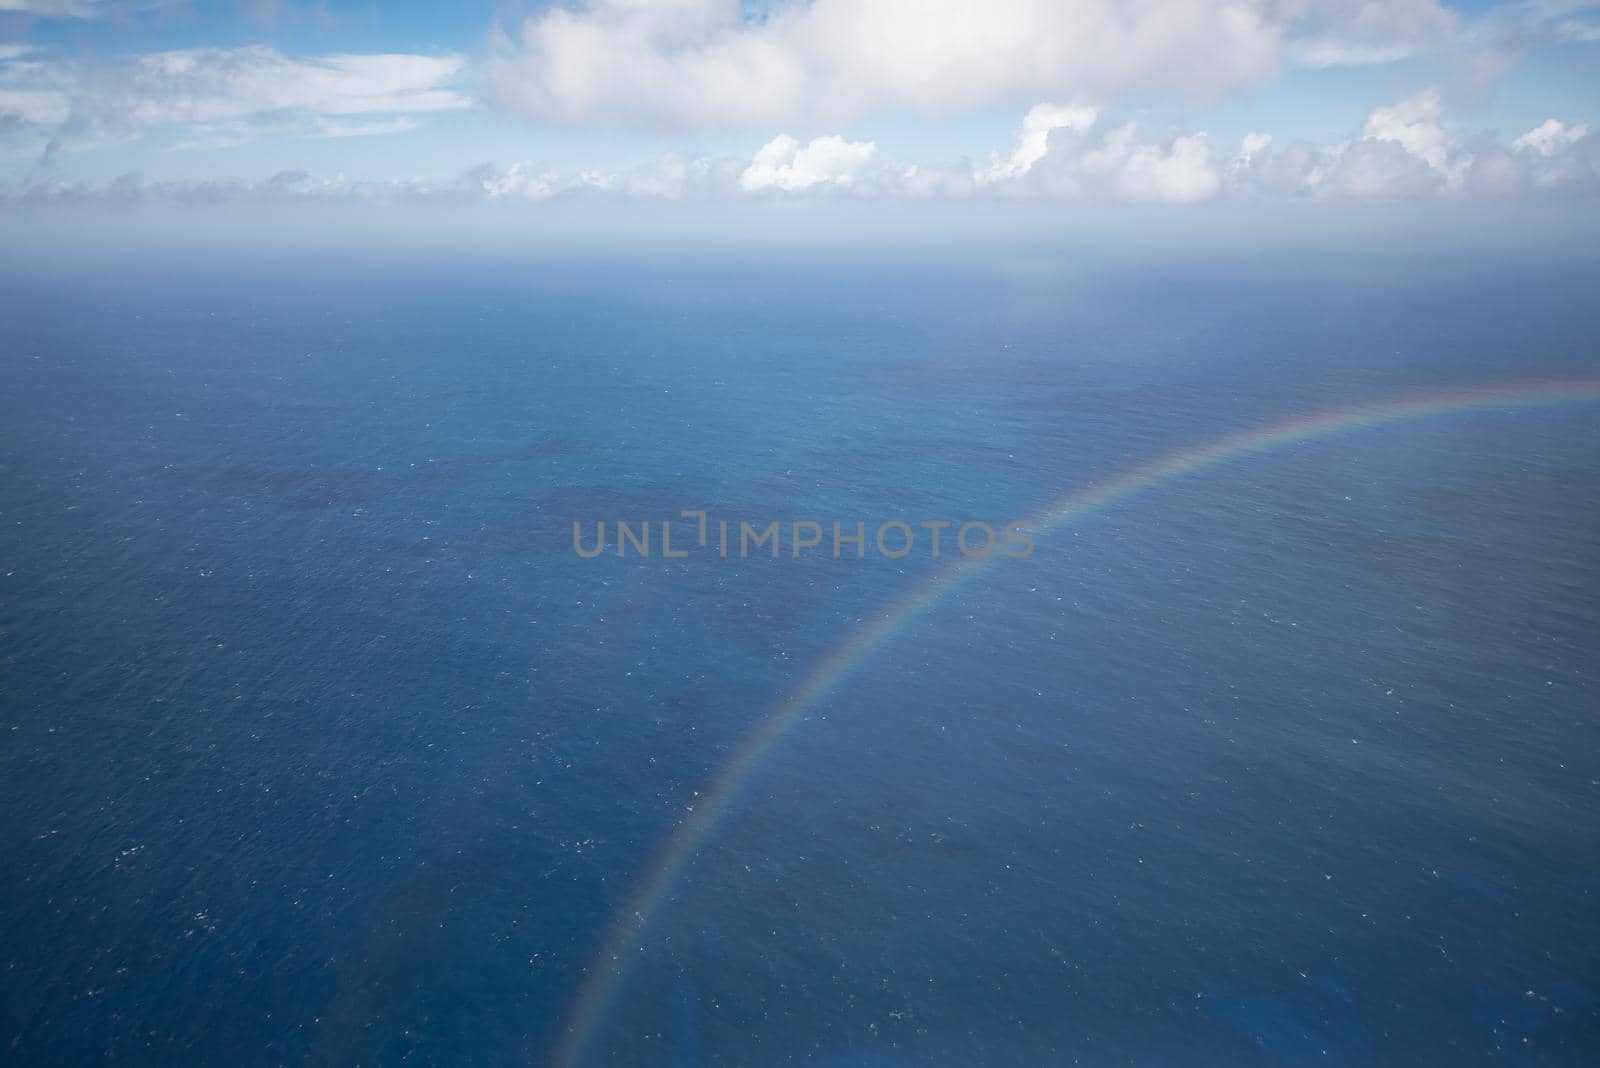 Rainbow crossing a dreamy seascape in Kauai